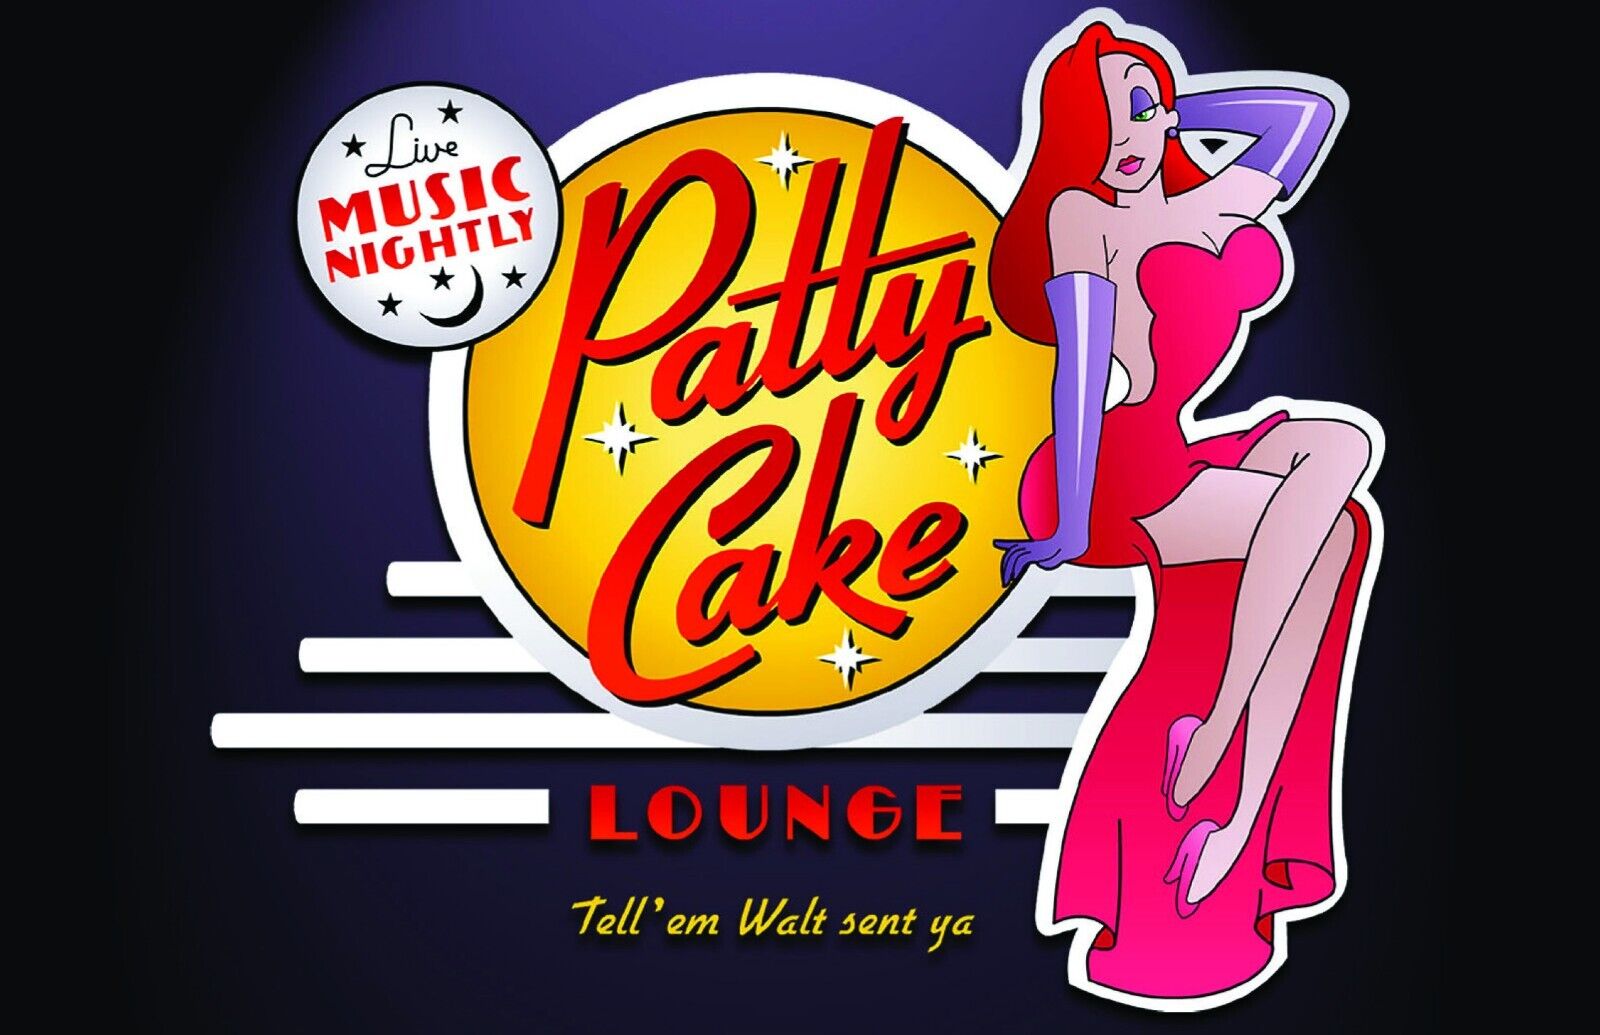 Who Framed Roger Rabbit Jessica Patty Cake Lounge Logo Poster Disney